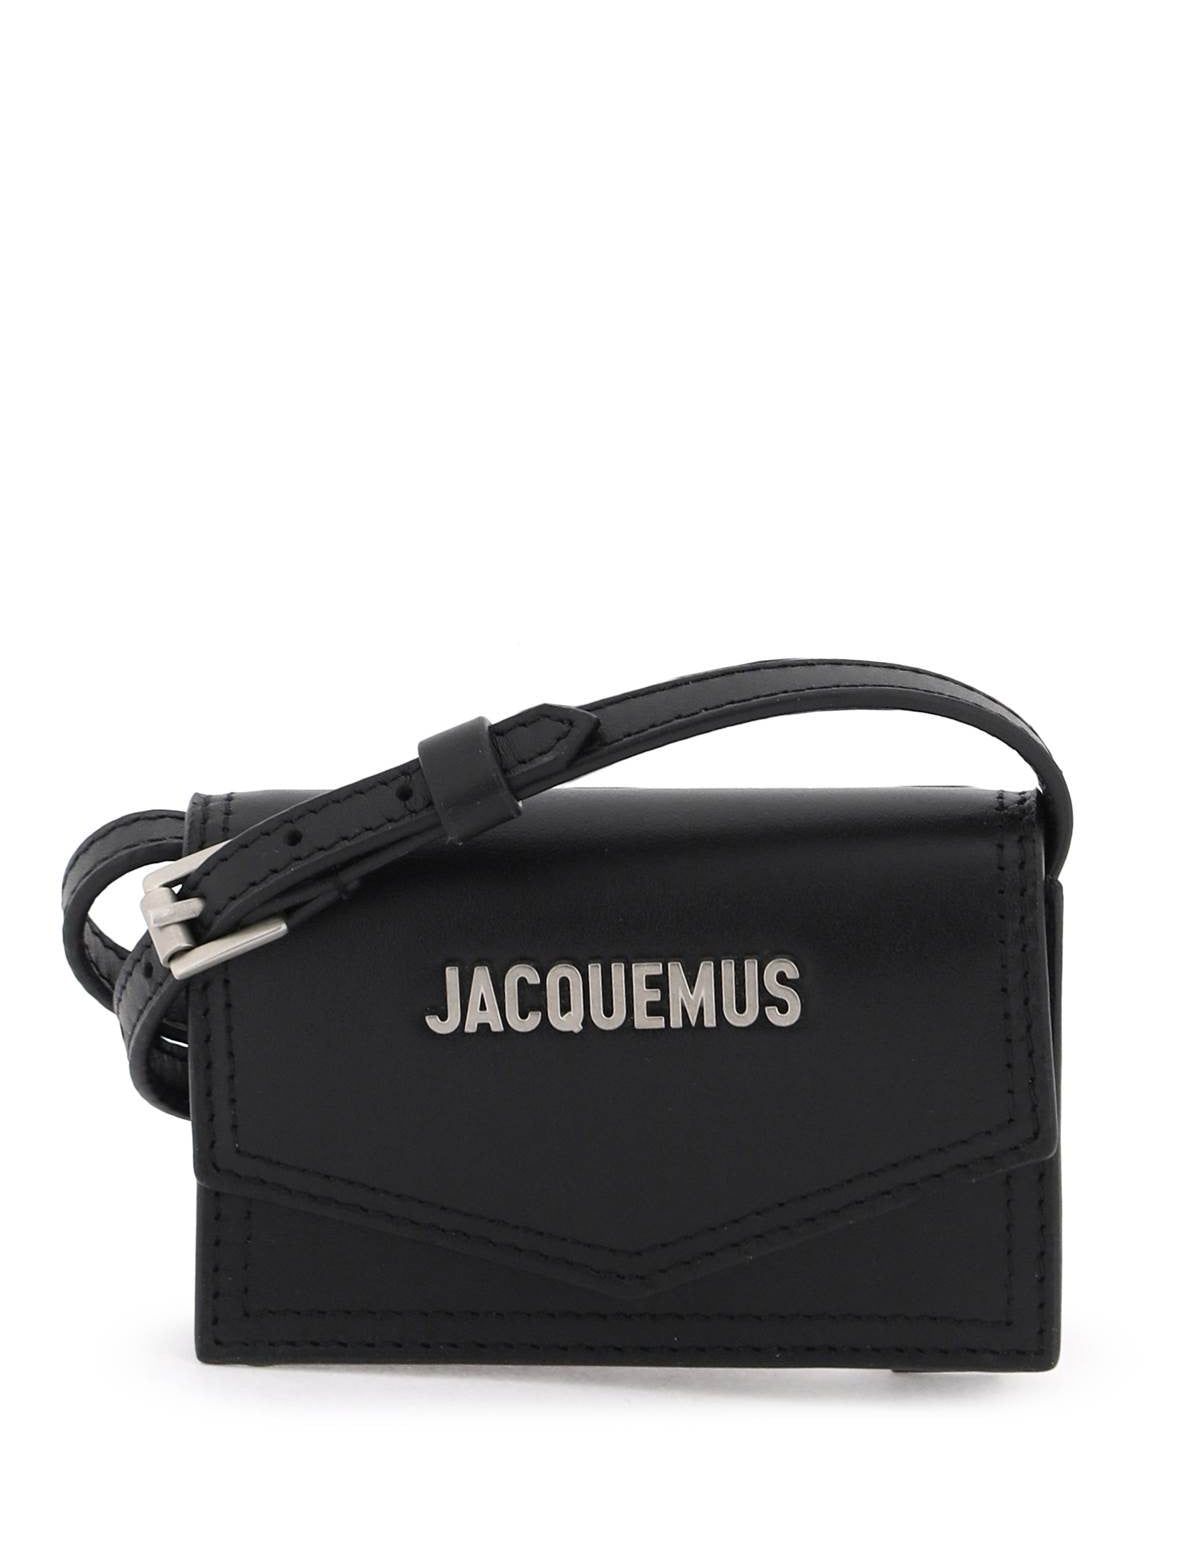 jacquemus-le-porte-azur-crossbody-cardholder_c59353d7-5996-4b72-a9a9-fed3f16b37e3.jpg